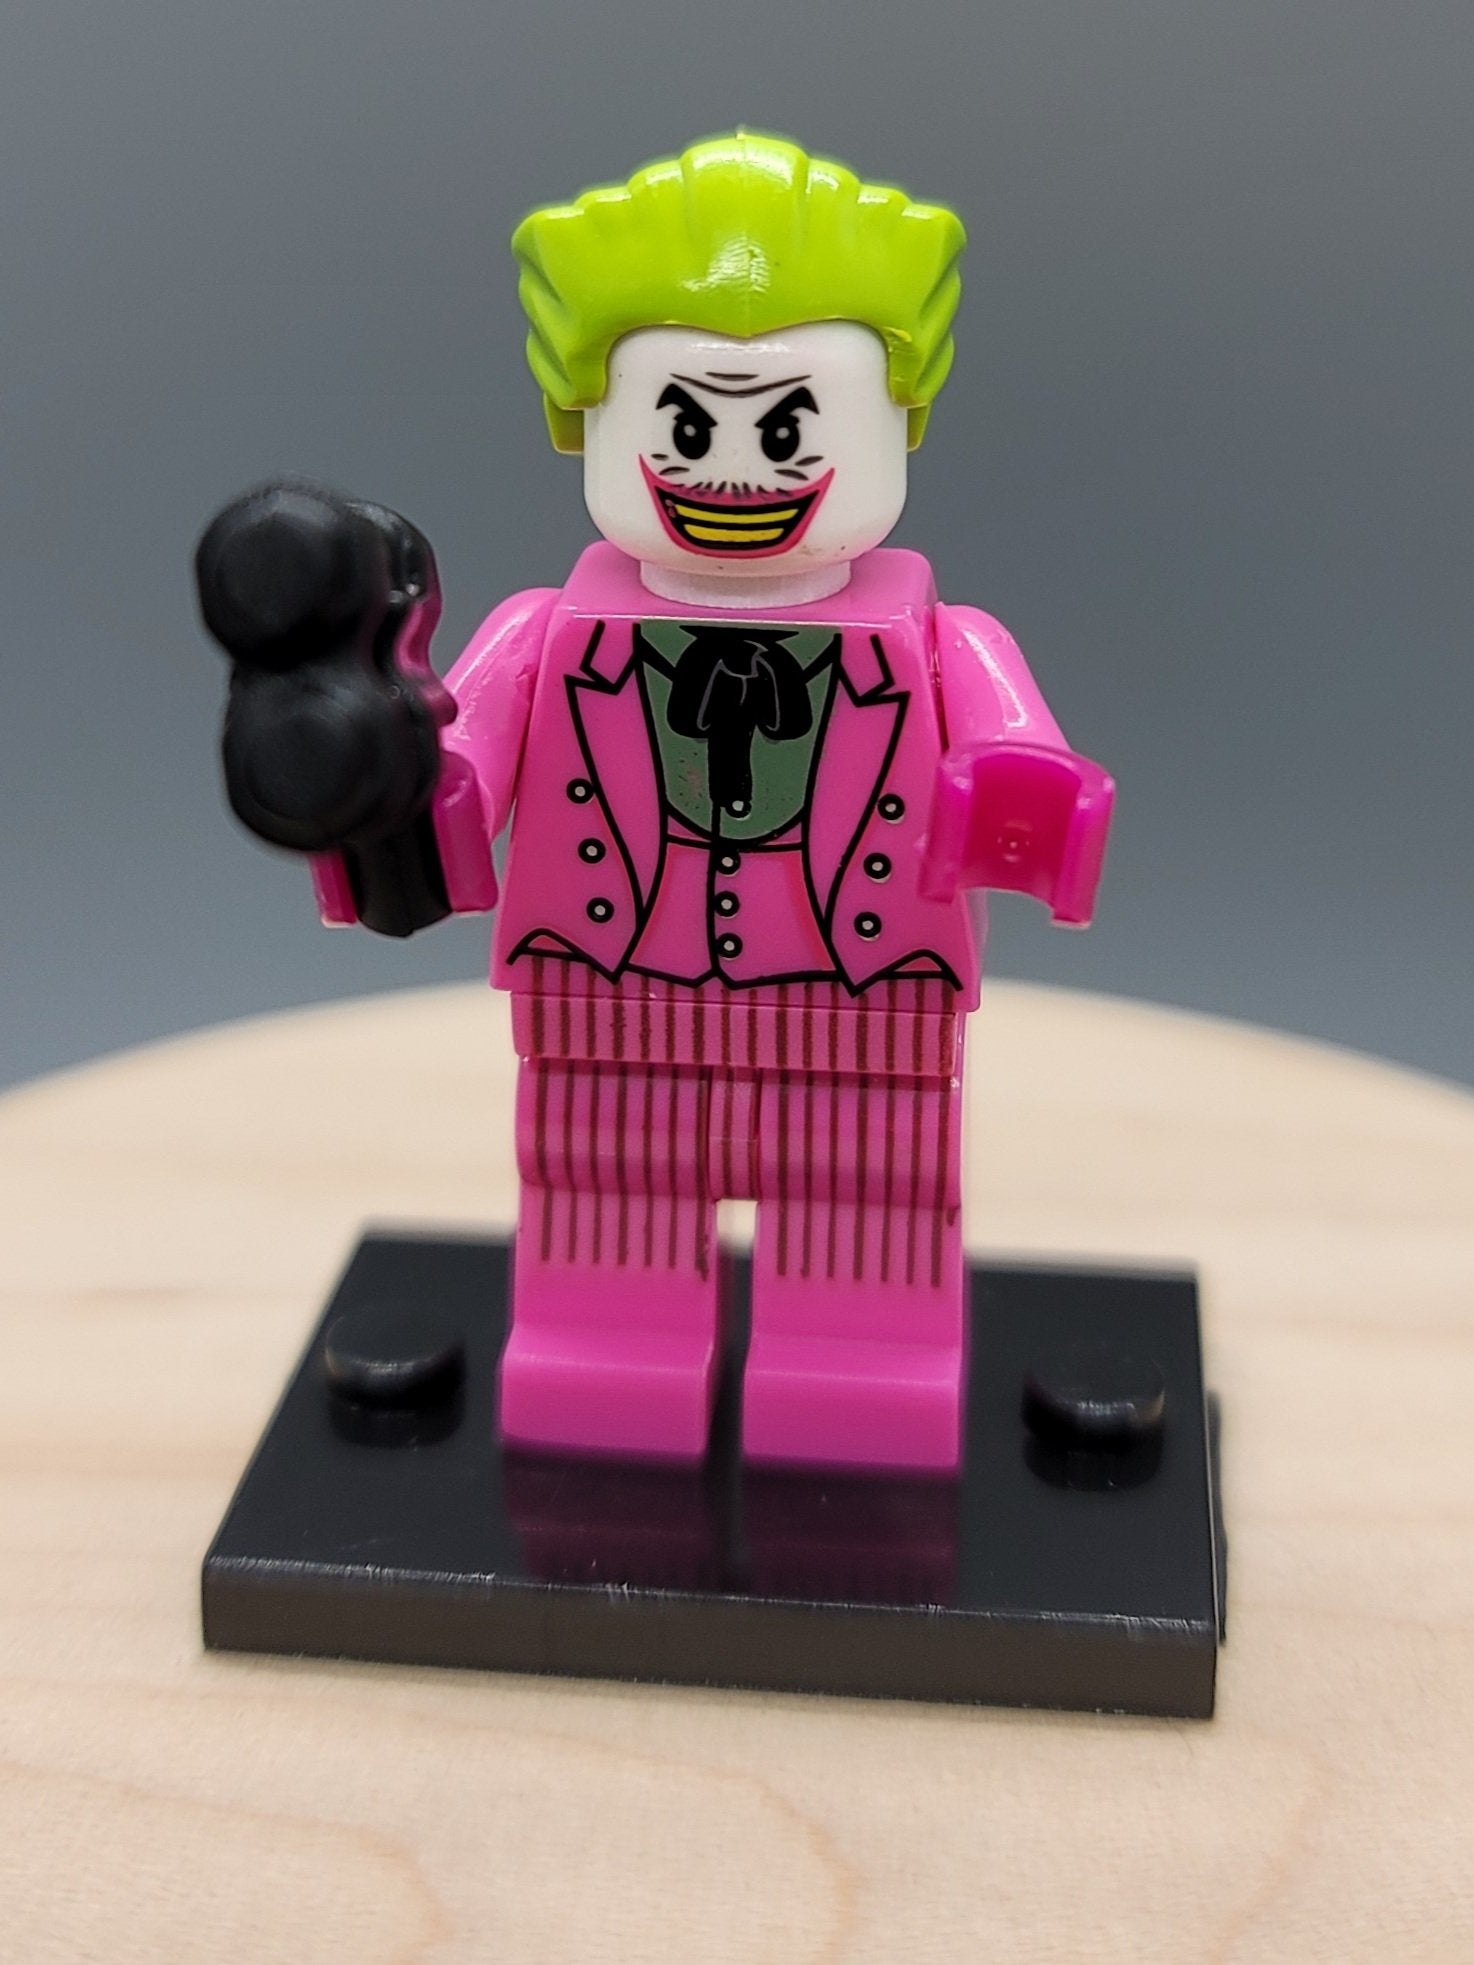 Joker Cartoon Custom minifigure by Beaus Bricks. Brand new in package. - BeausBricks